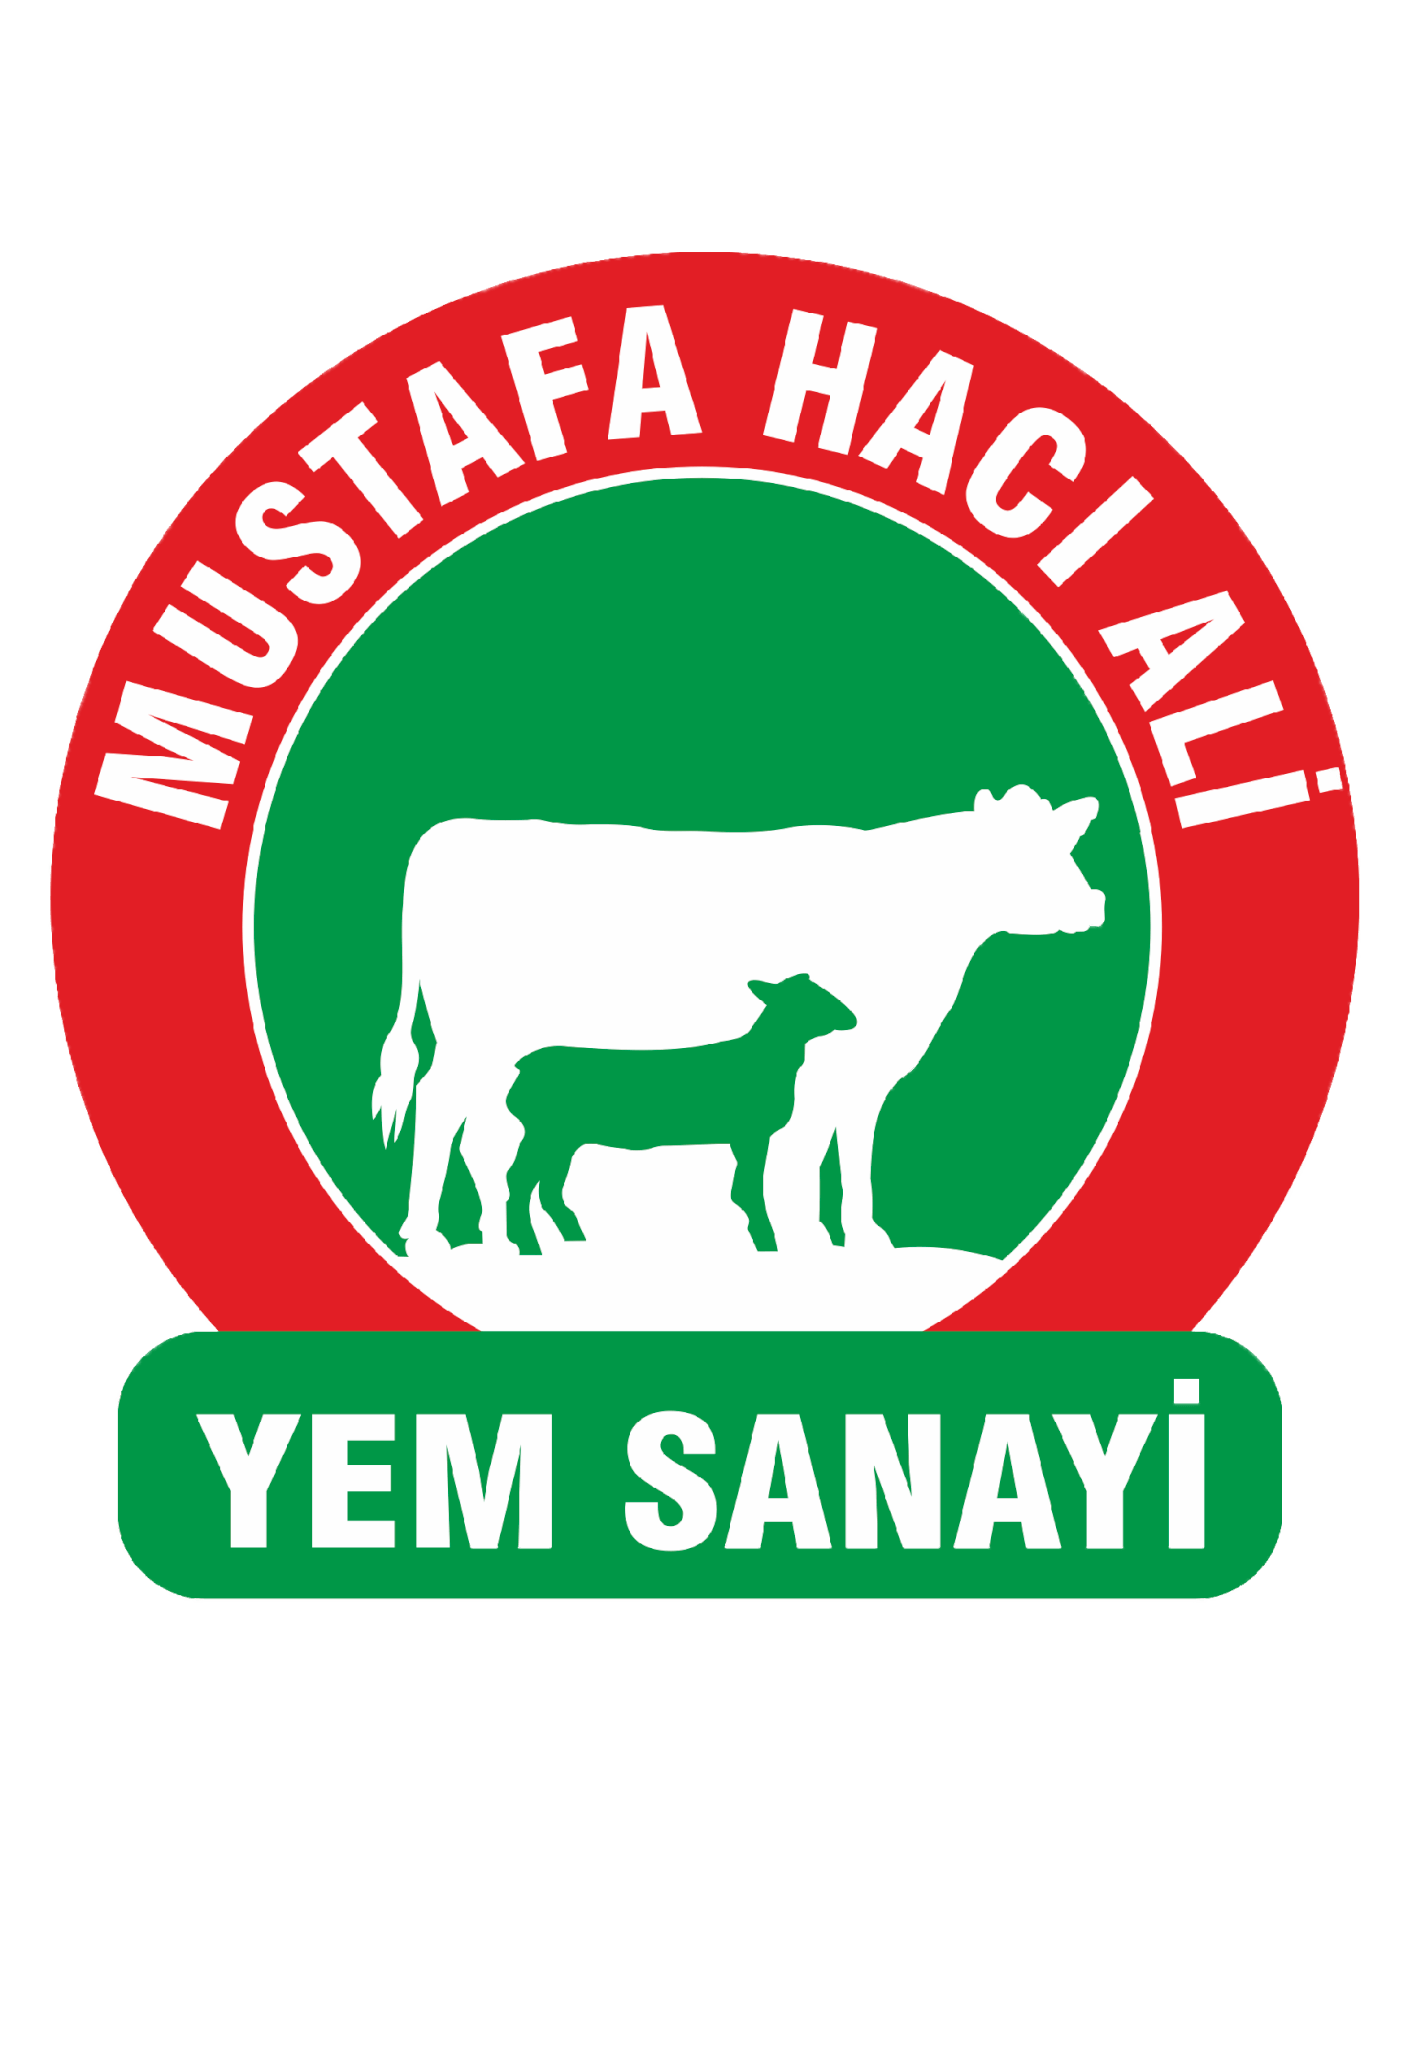 Yem Sanayi  : Mustafa Hacı Ali Yem Sanayi